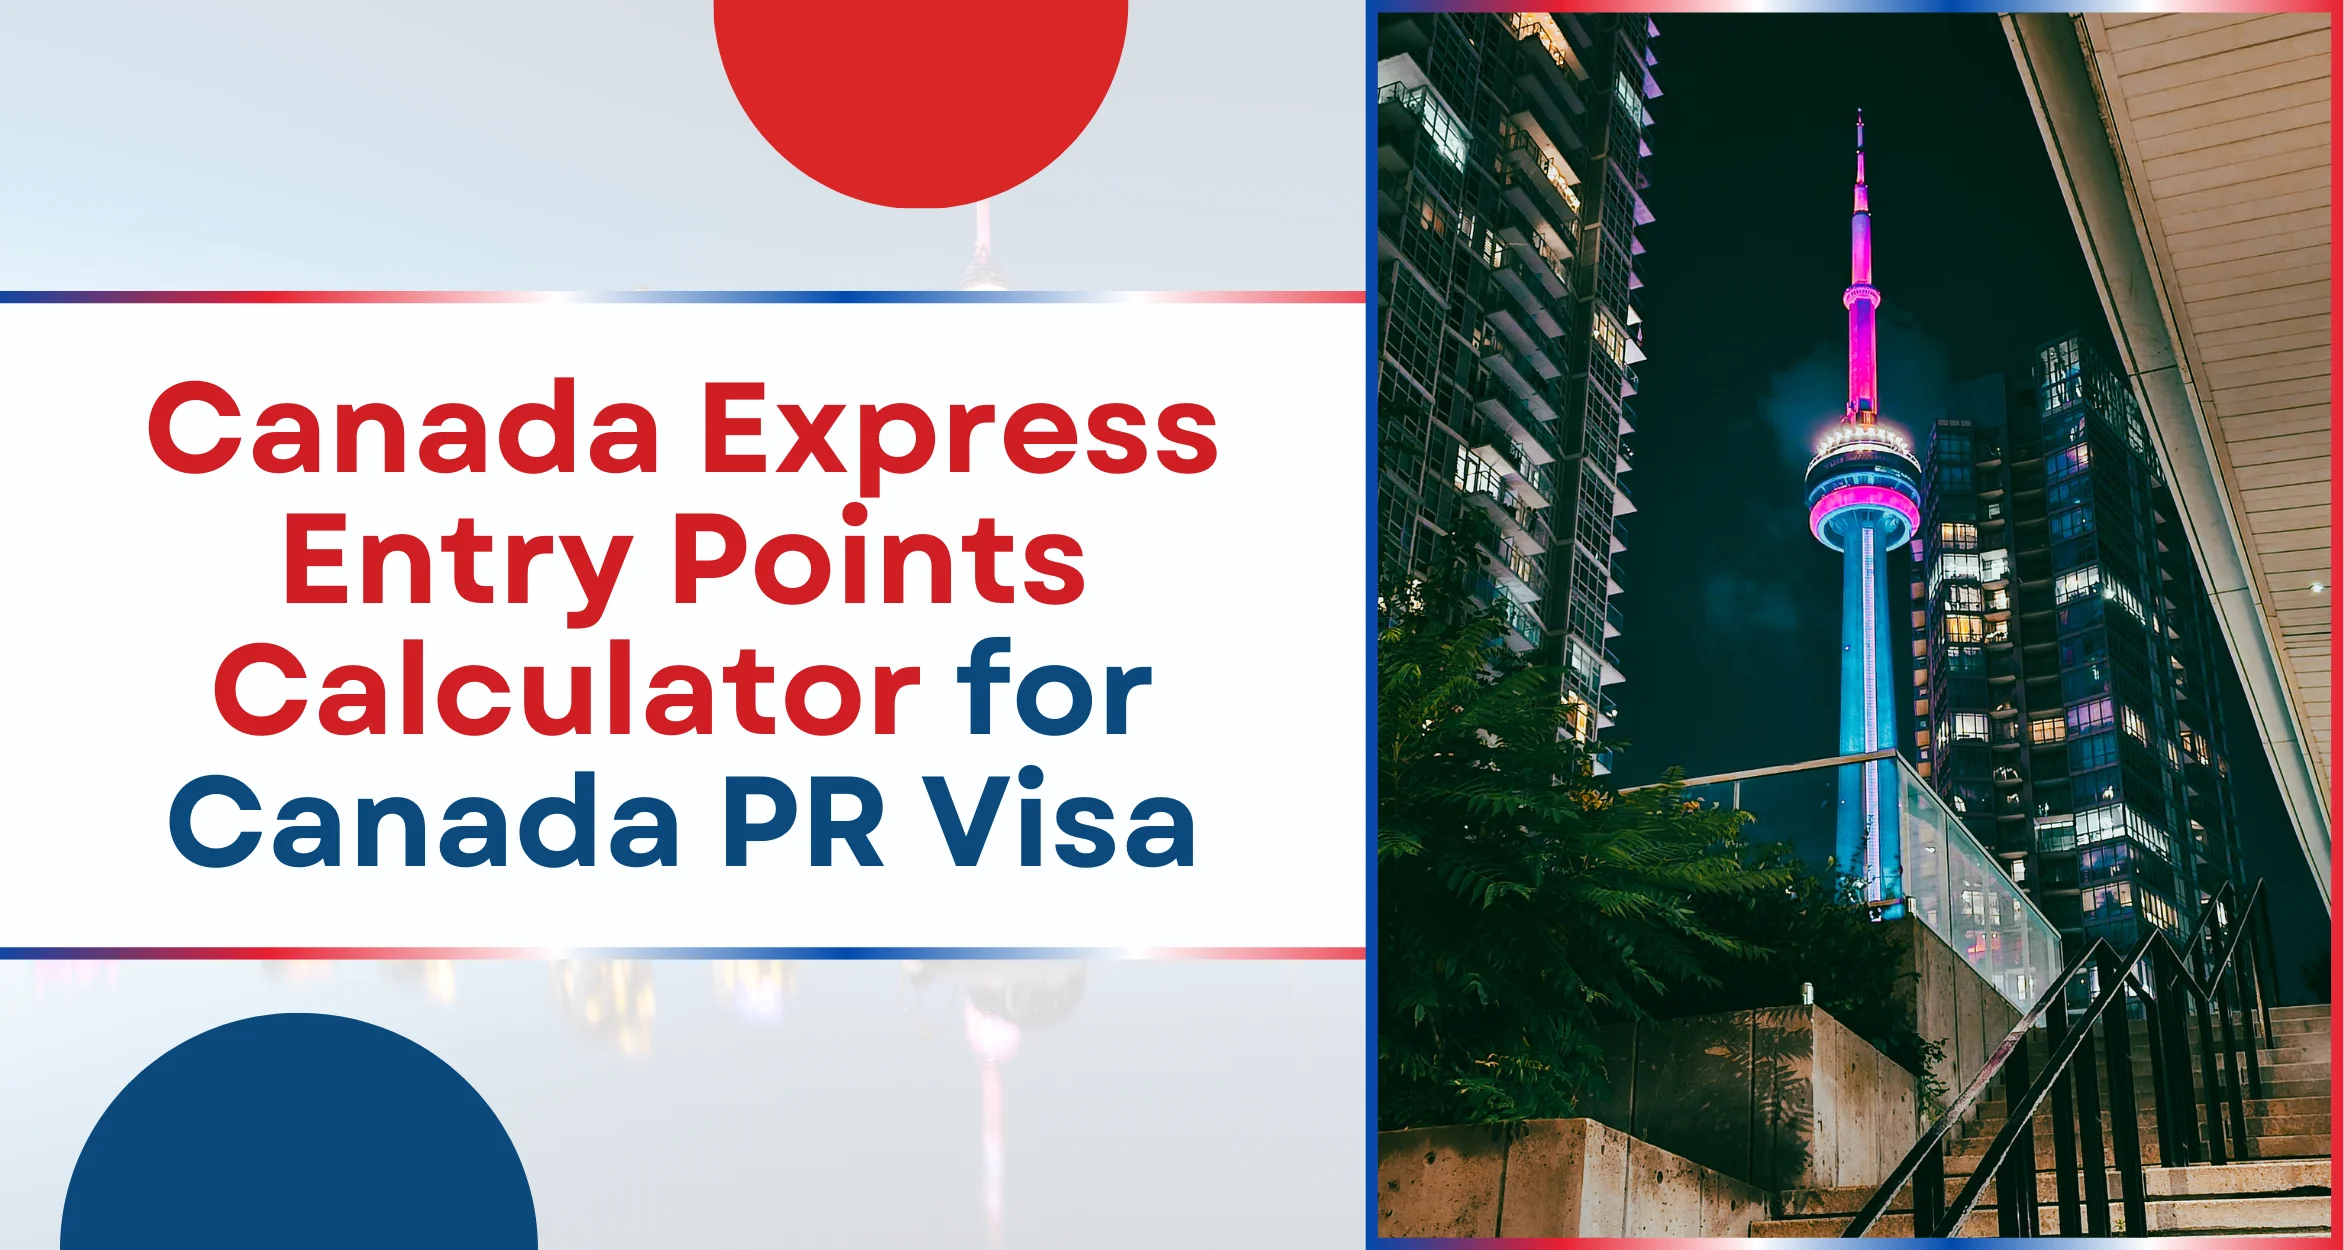 Canada Express Entry Points Calculator for Canada PR Visa